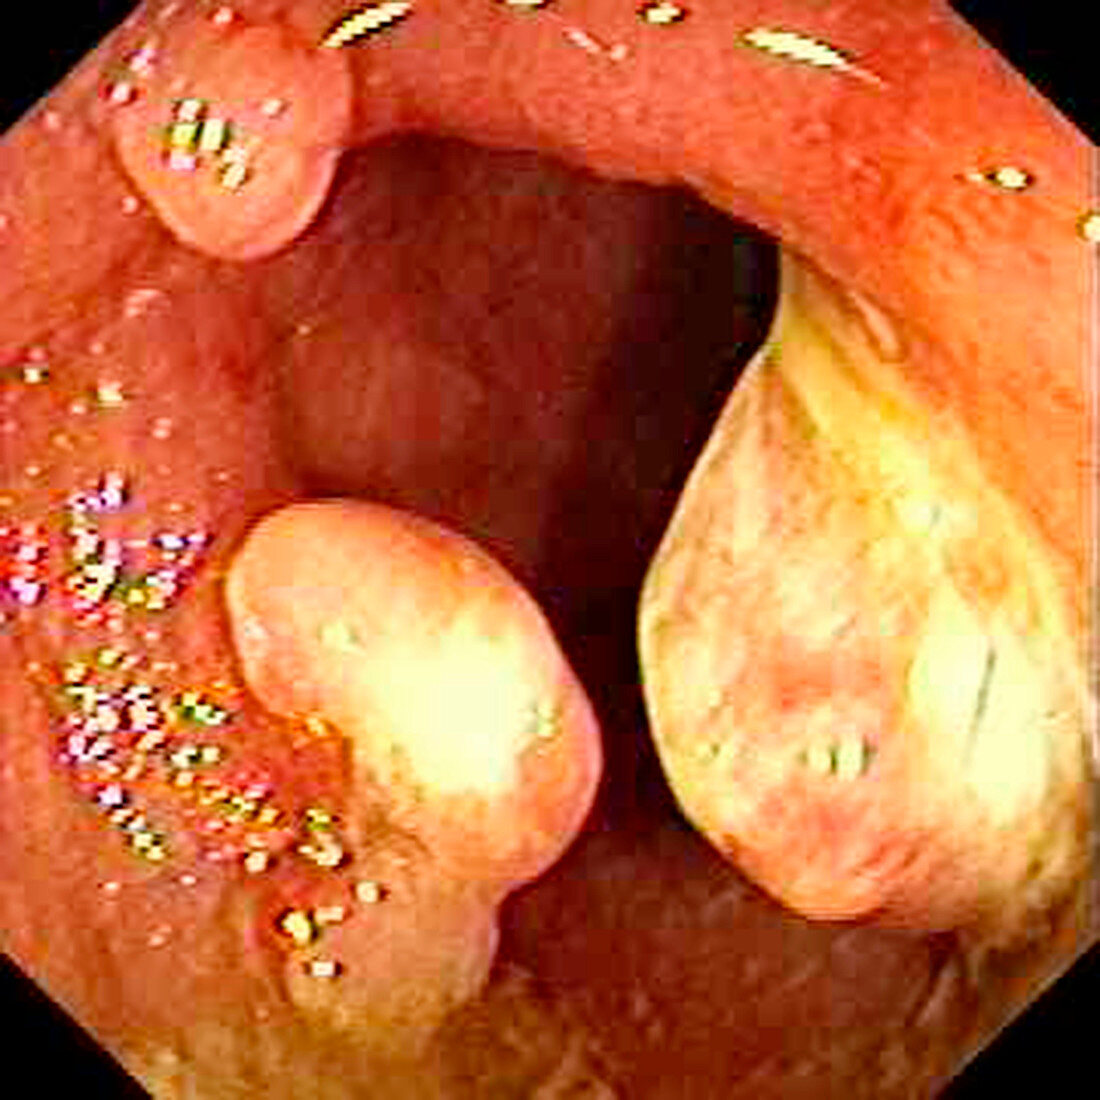 Inflammatory polyps in ulcerative colitis